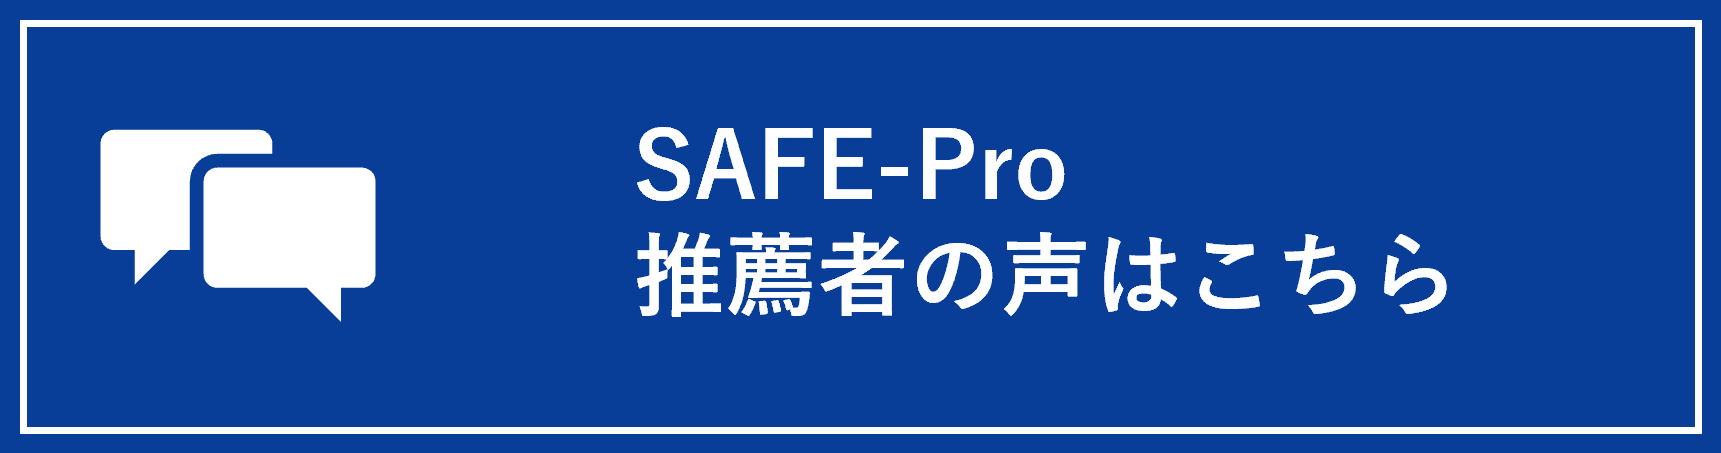 SAFE-Pro推薦者の声